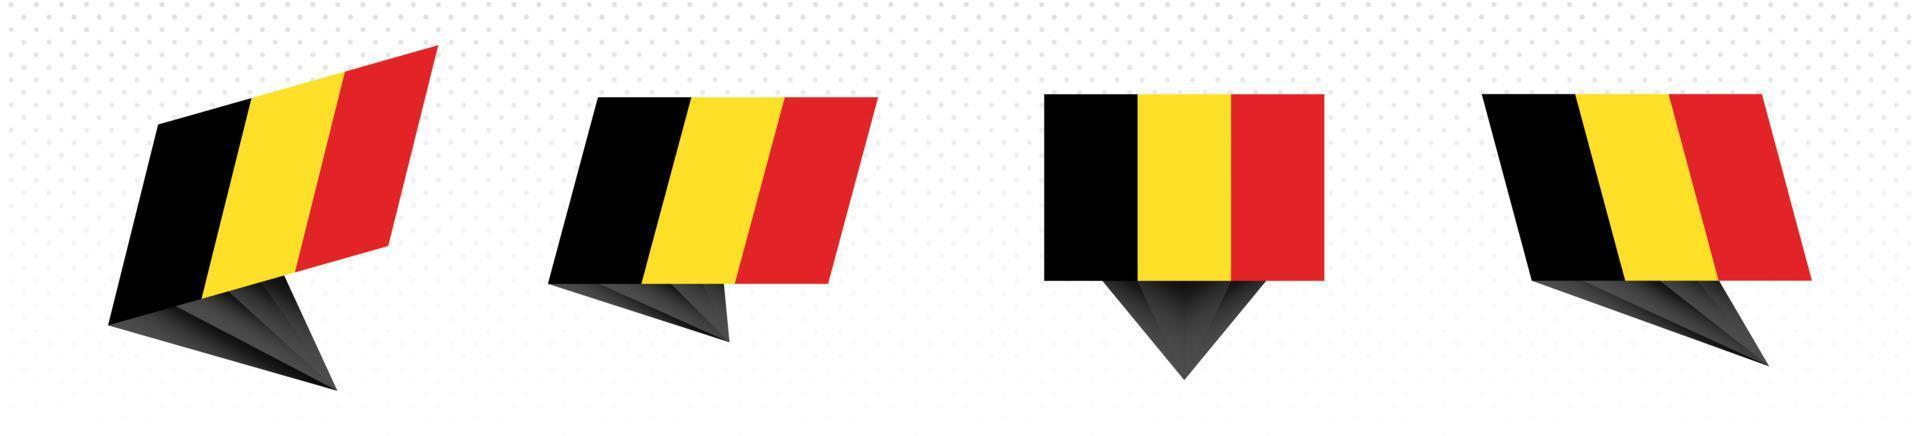 Flagge von Belgien im modernen abstrakten Design, Flaggensatz. vektor